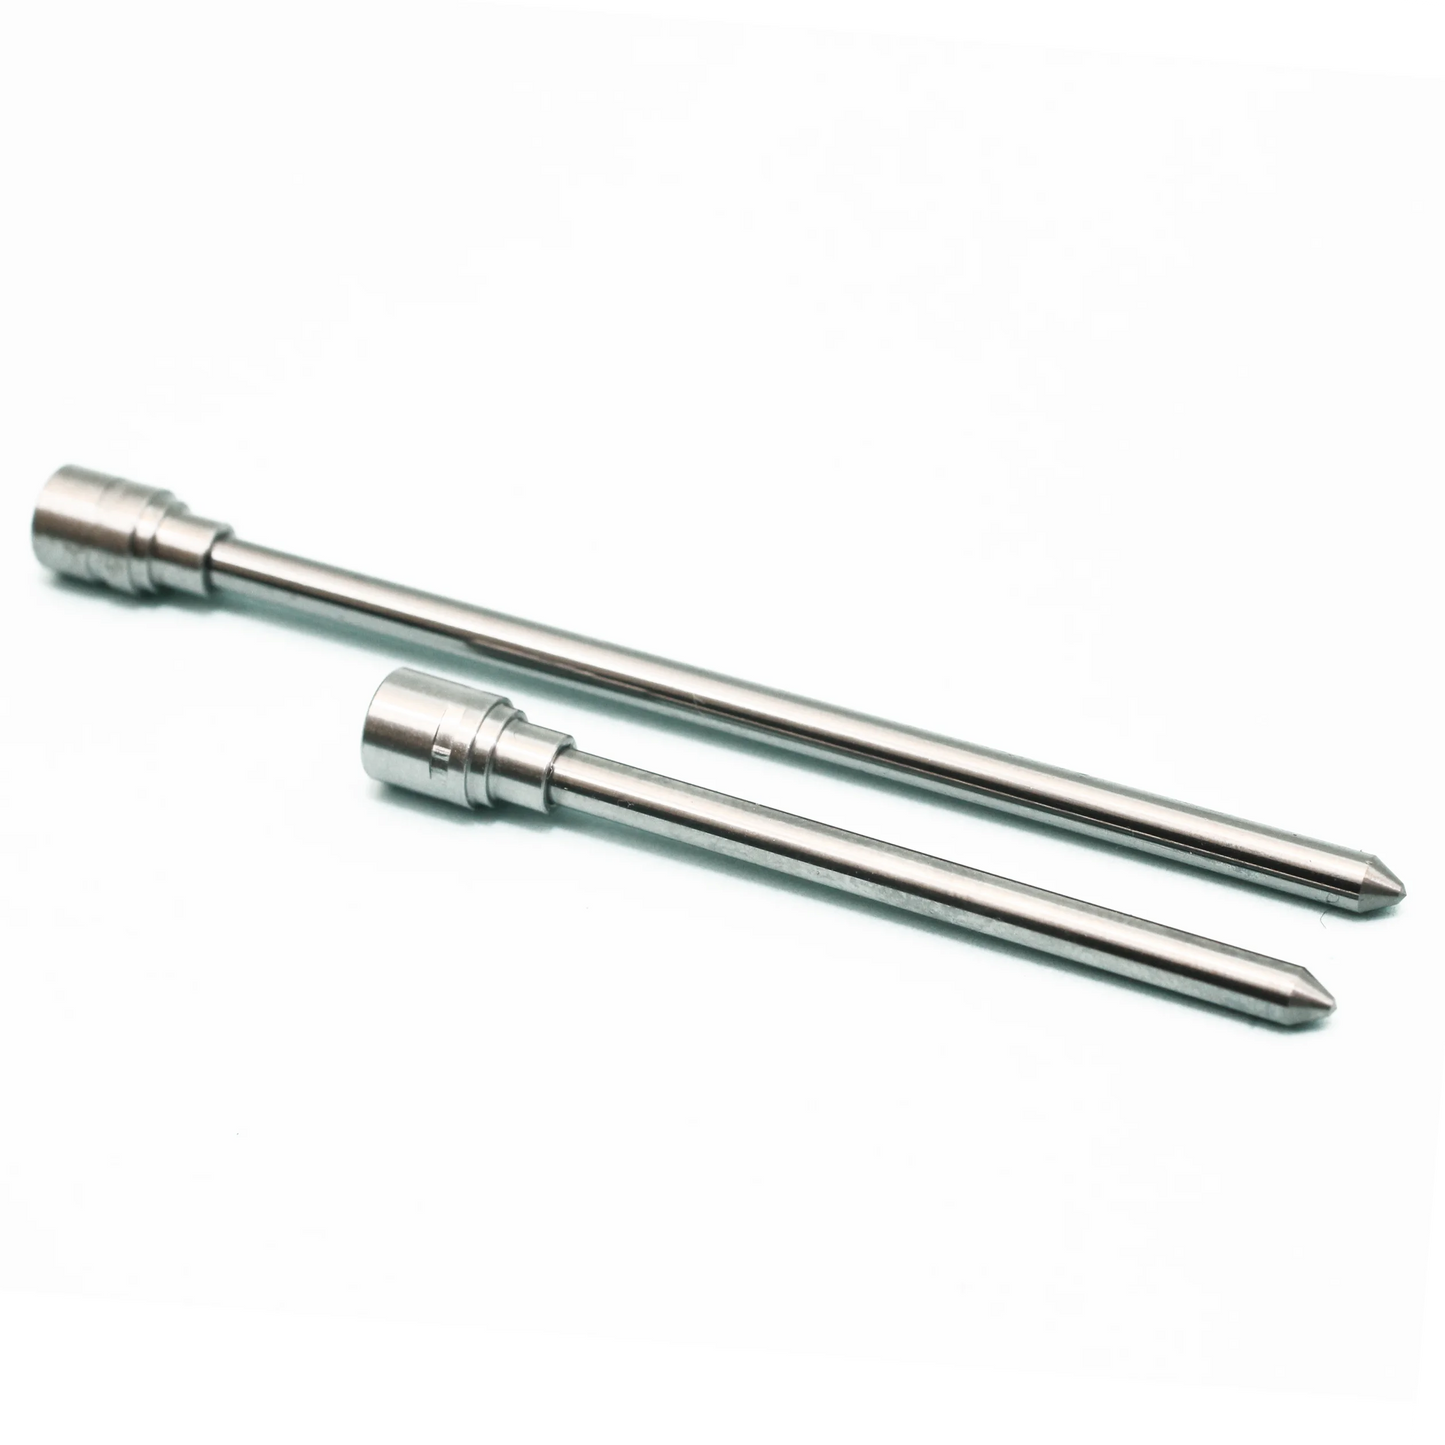 Carbide Pin - 120° Tip angle, Extra Length